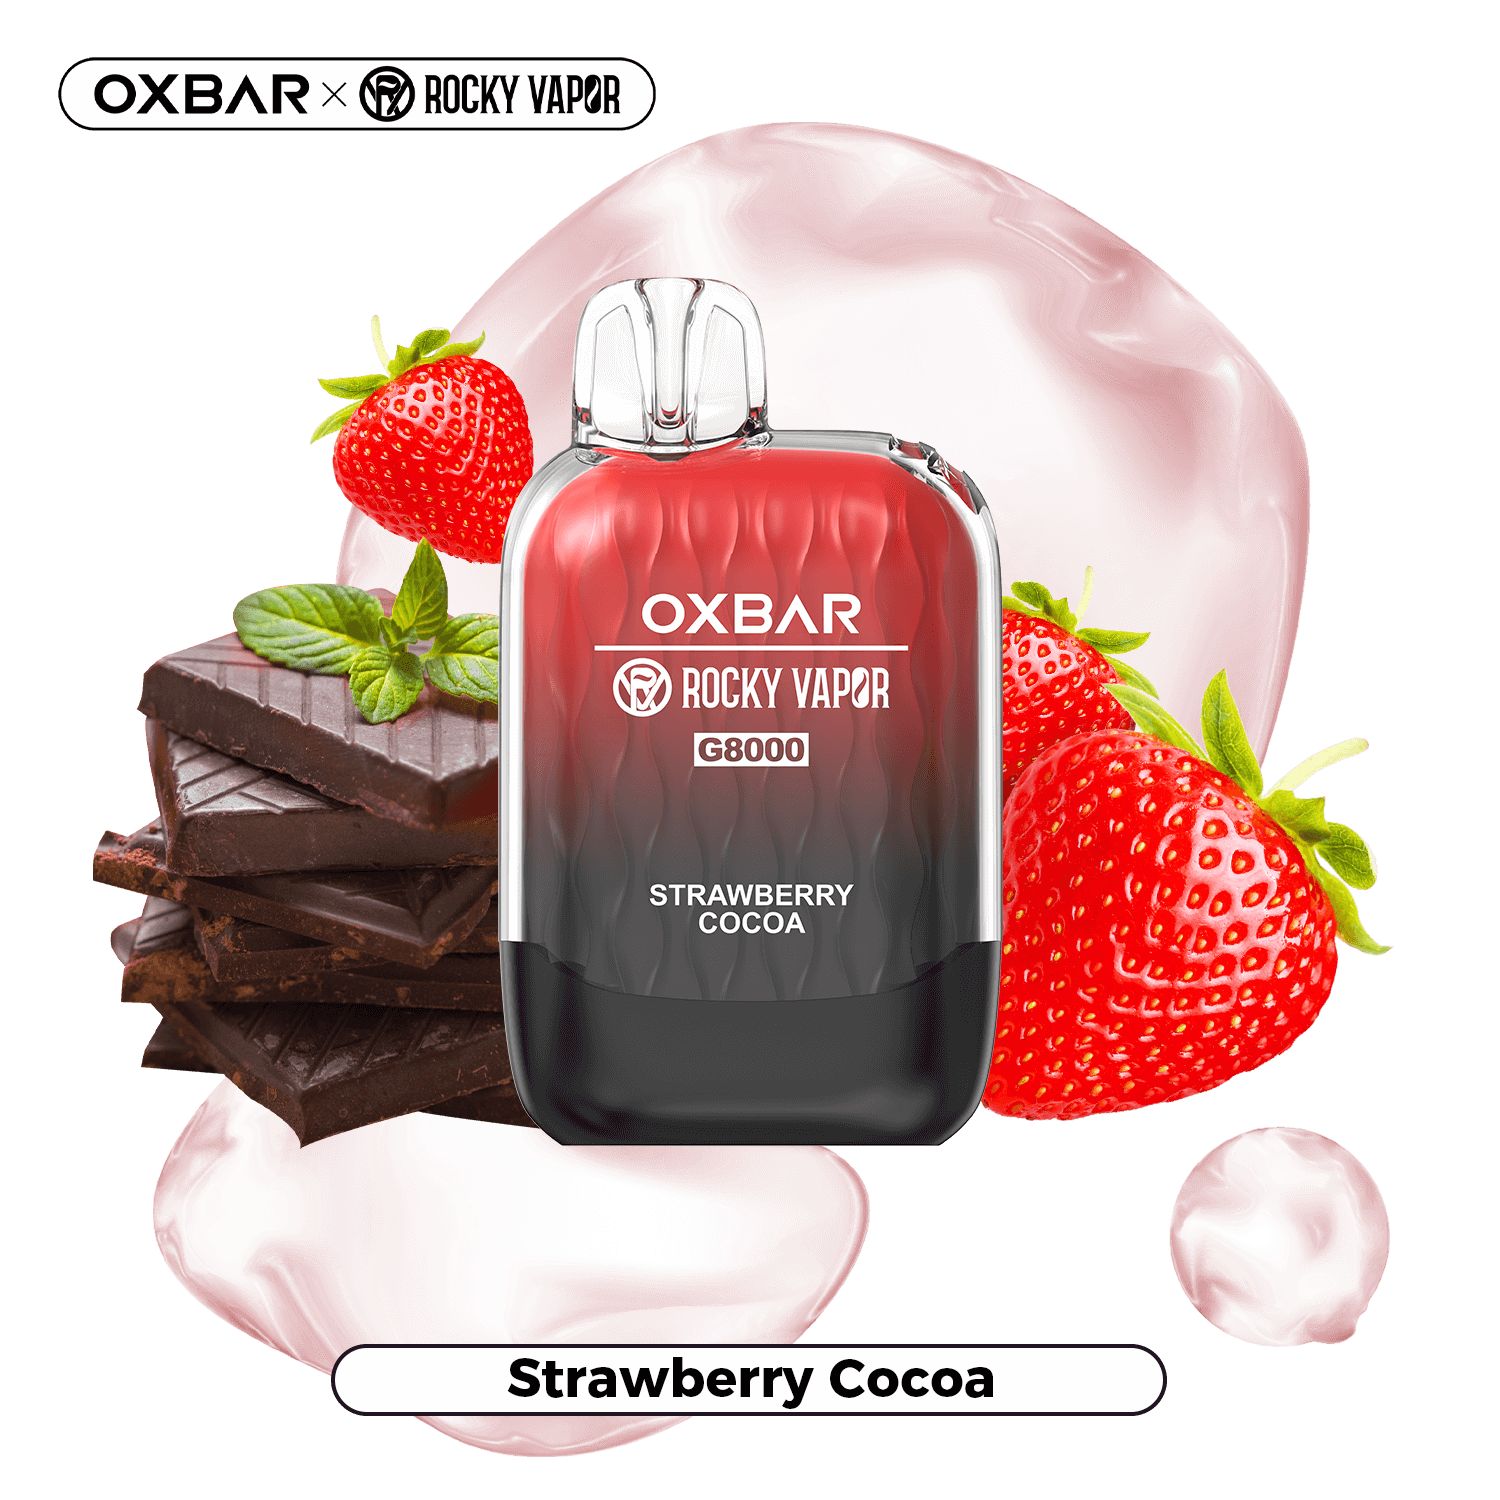 OXBar Rocky Vapor G8000 Strawberry Cocoa